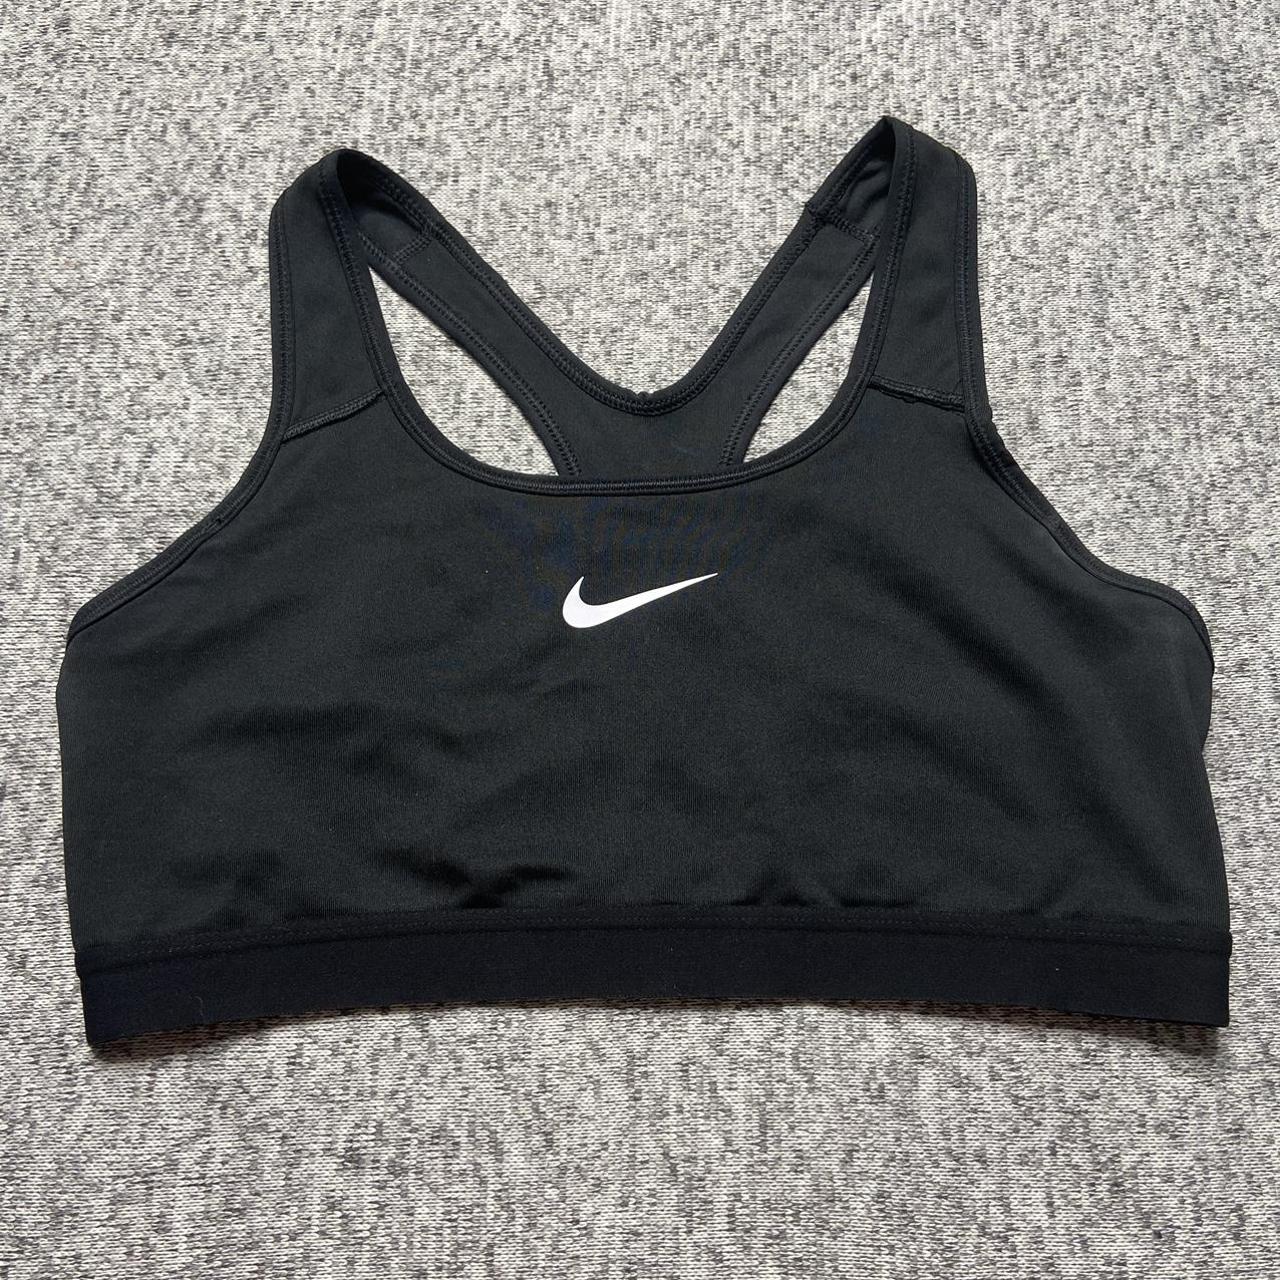 Nike Women's Black and White Bra | Depop